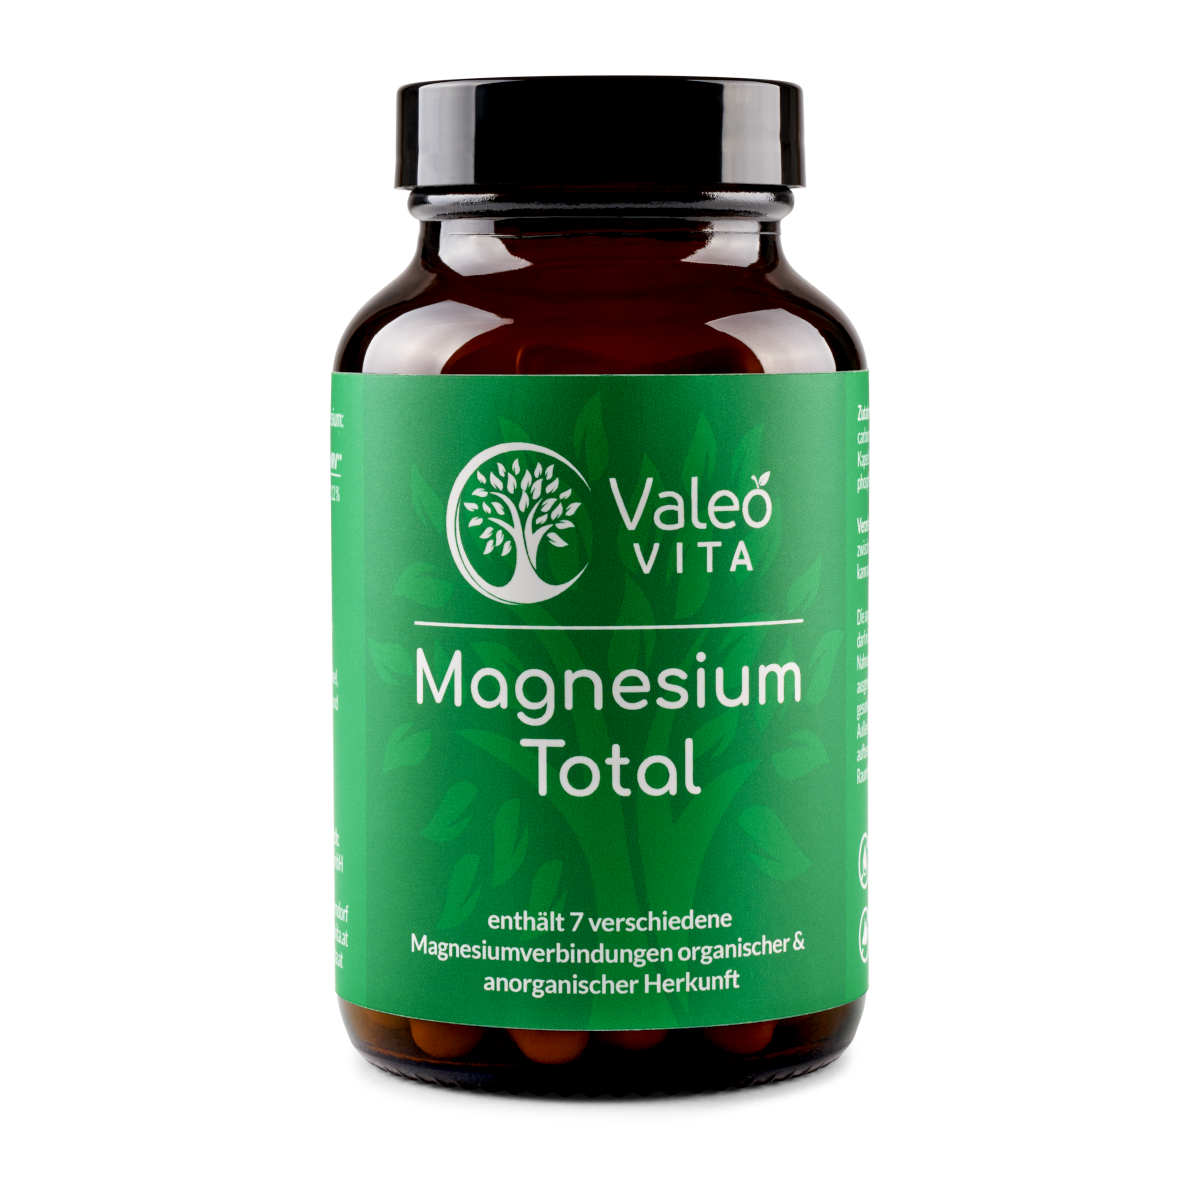 Valeo Vita Magnesium Total